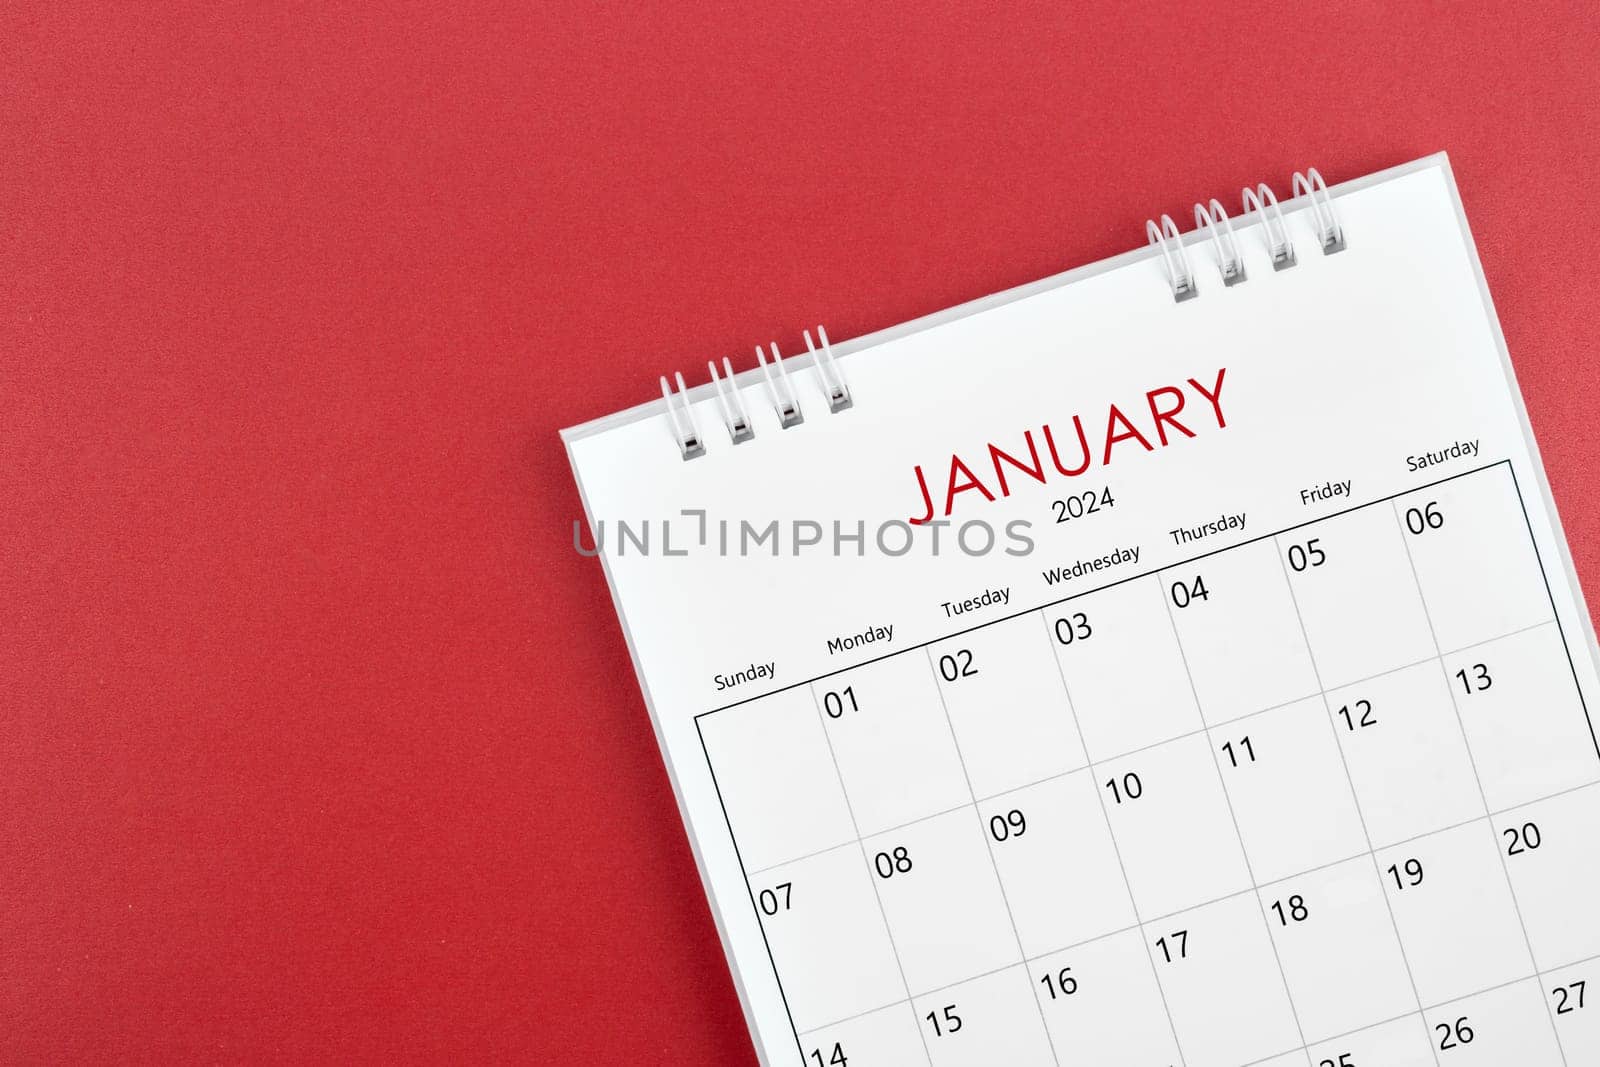 January 2024 desk calendar on red background. by Gamjai